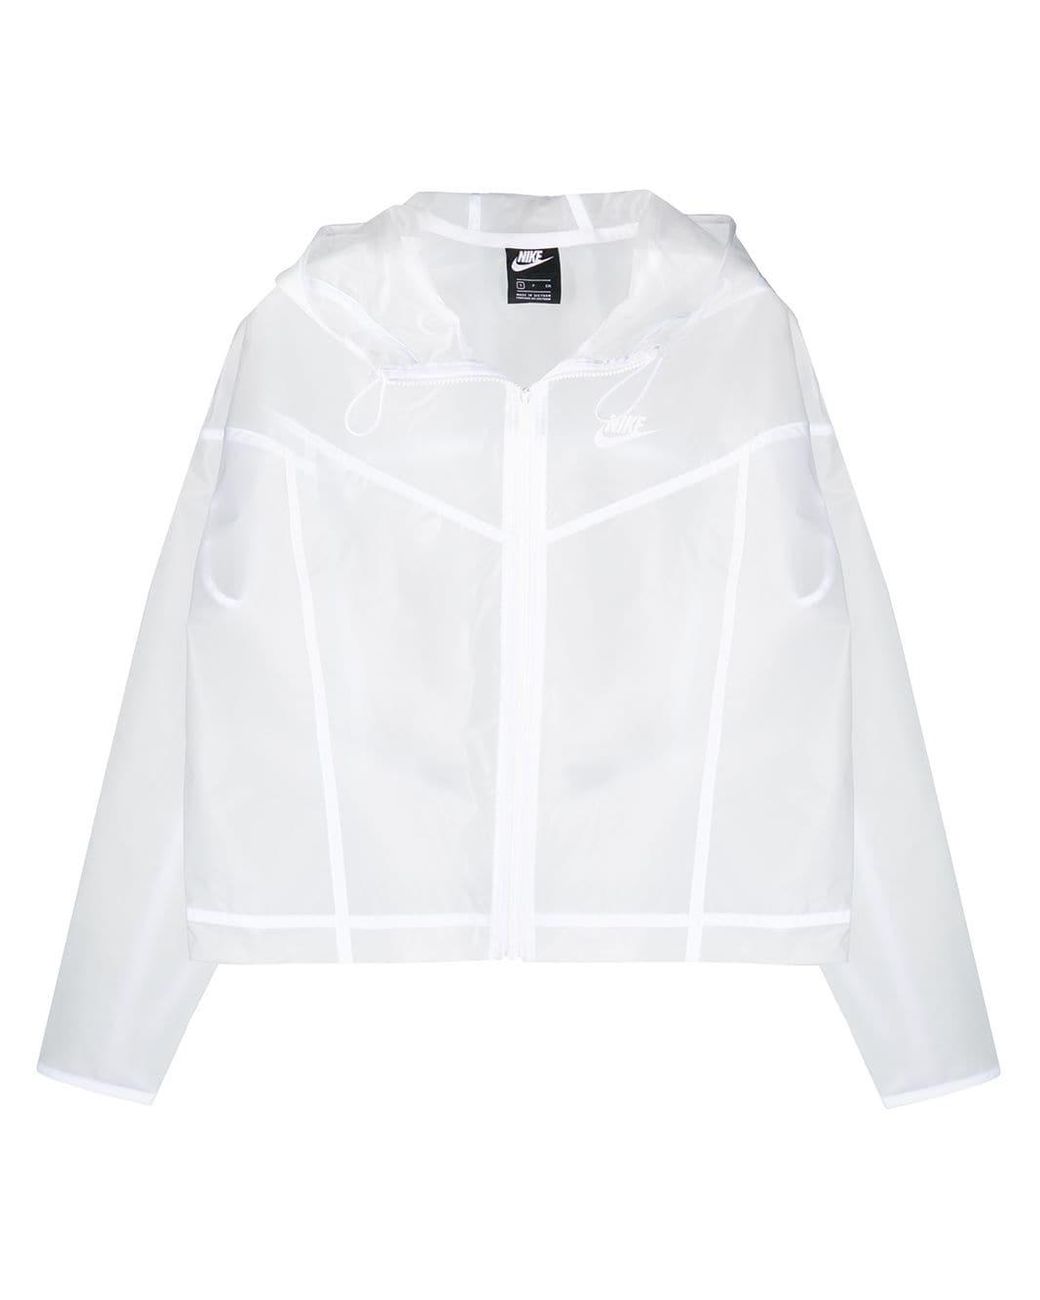 Nike Logo Print Sheer Jacket in White | Lyst